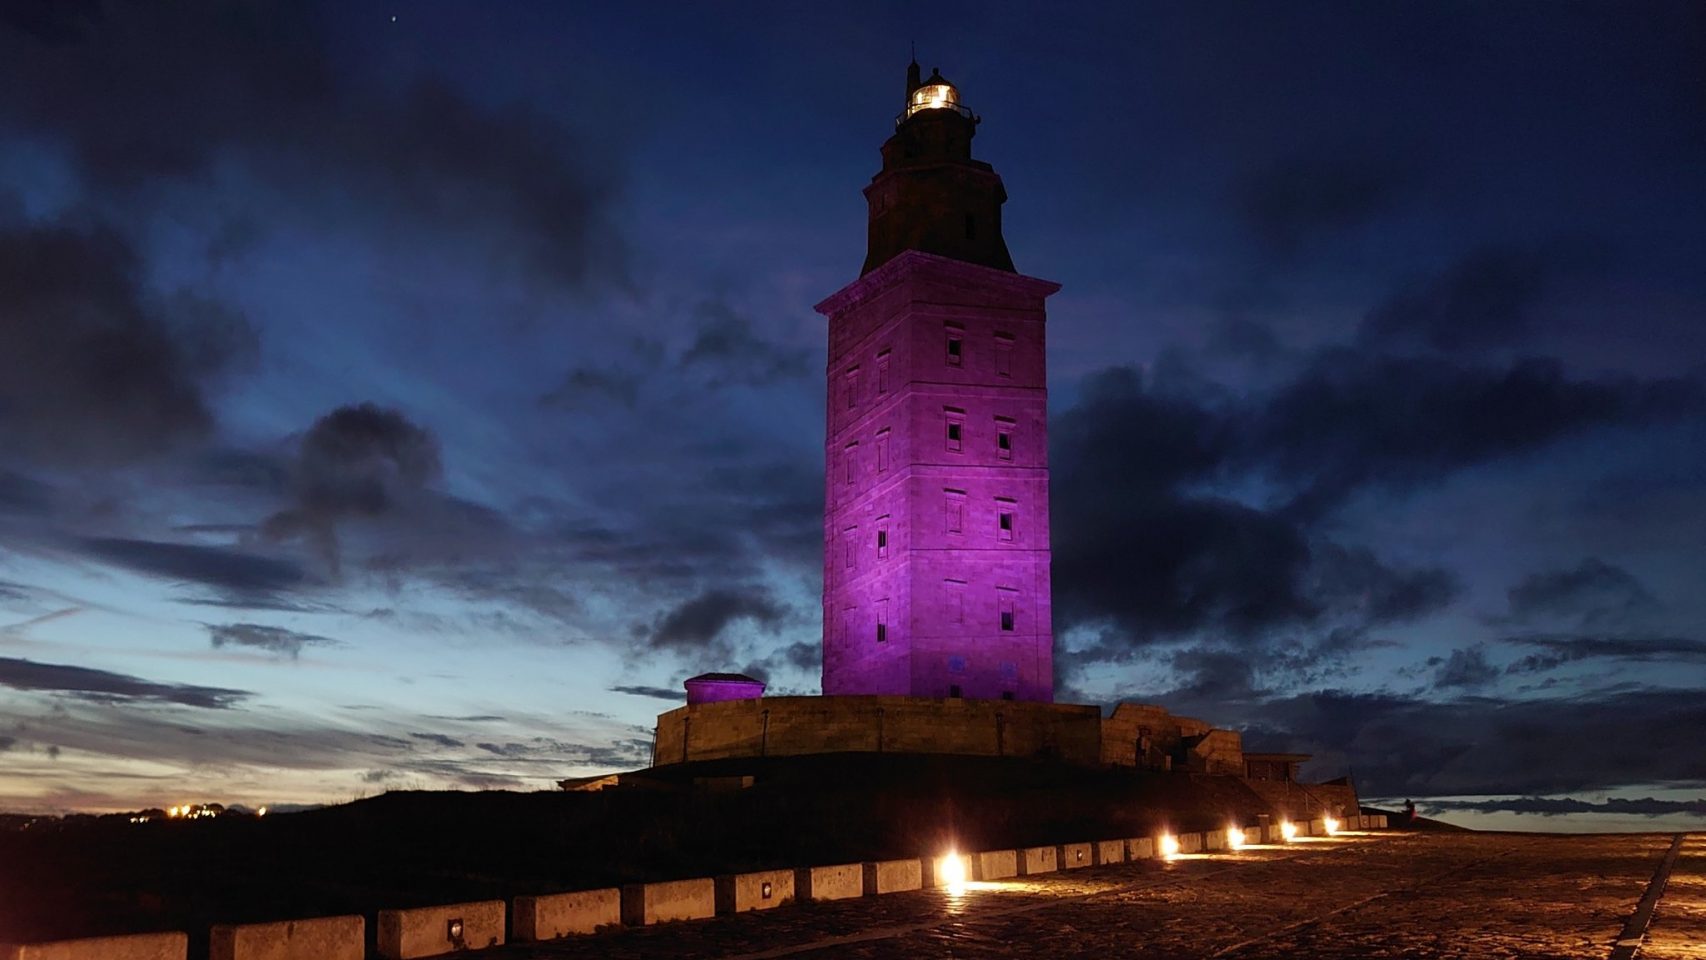 La Torre de Hércules luce iluminada de morado